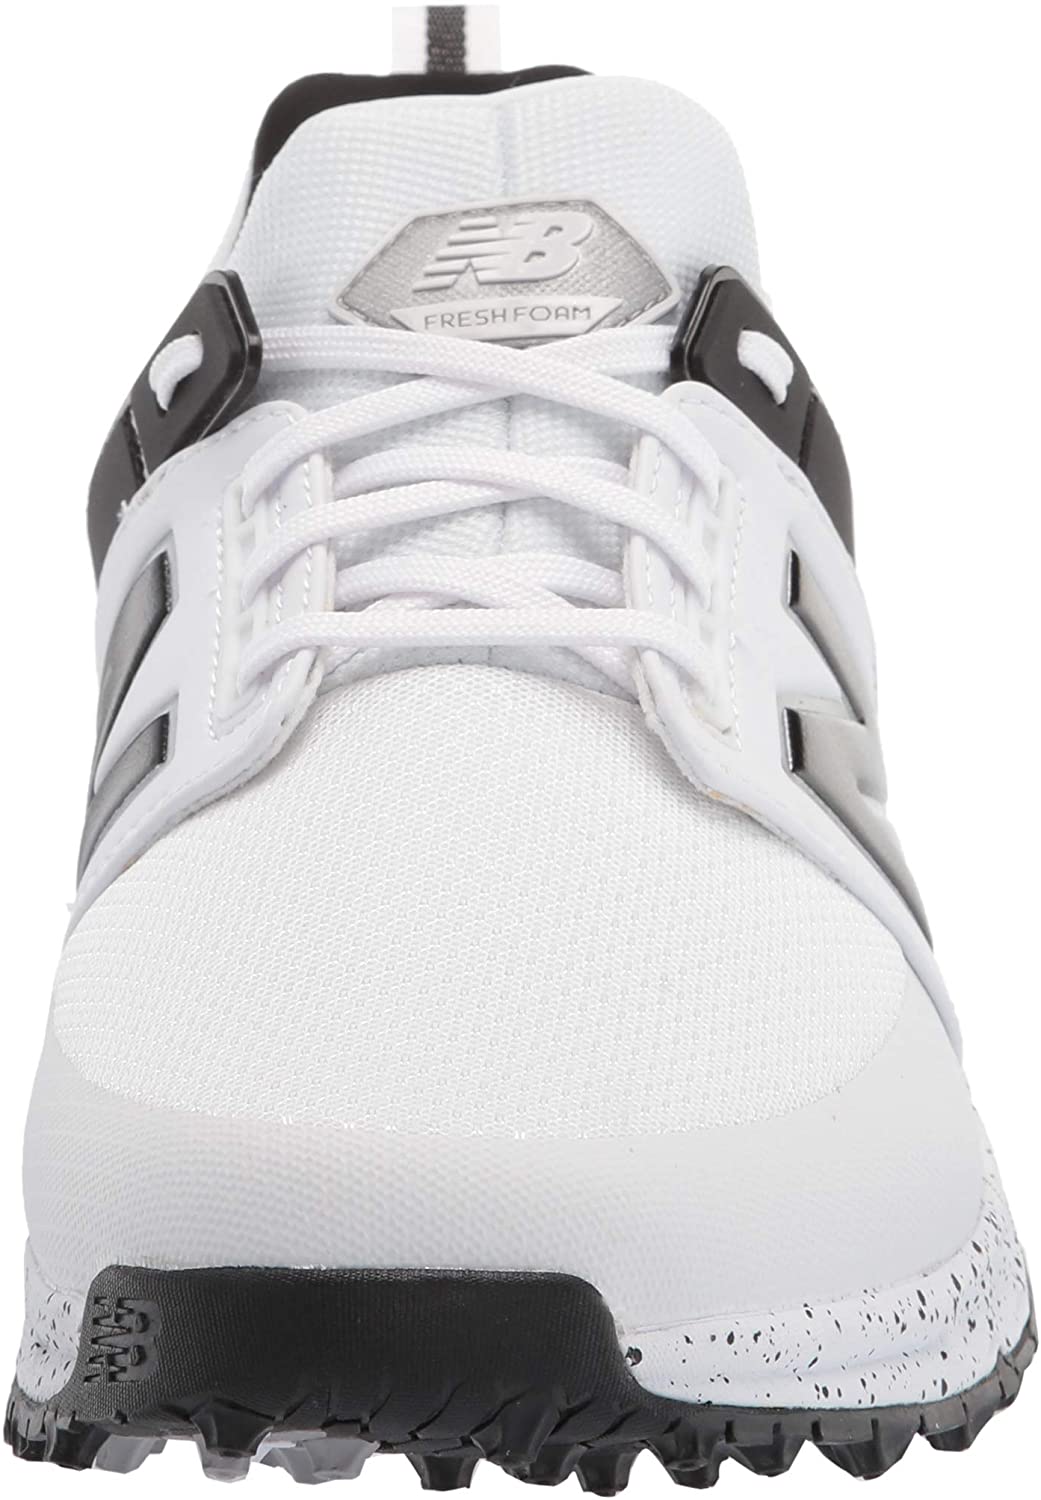 New Balance Mens Fresh Foam Linkssl Golf Shoe 16 White/Black - image 2 of 8